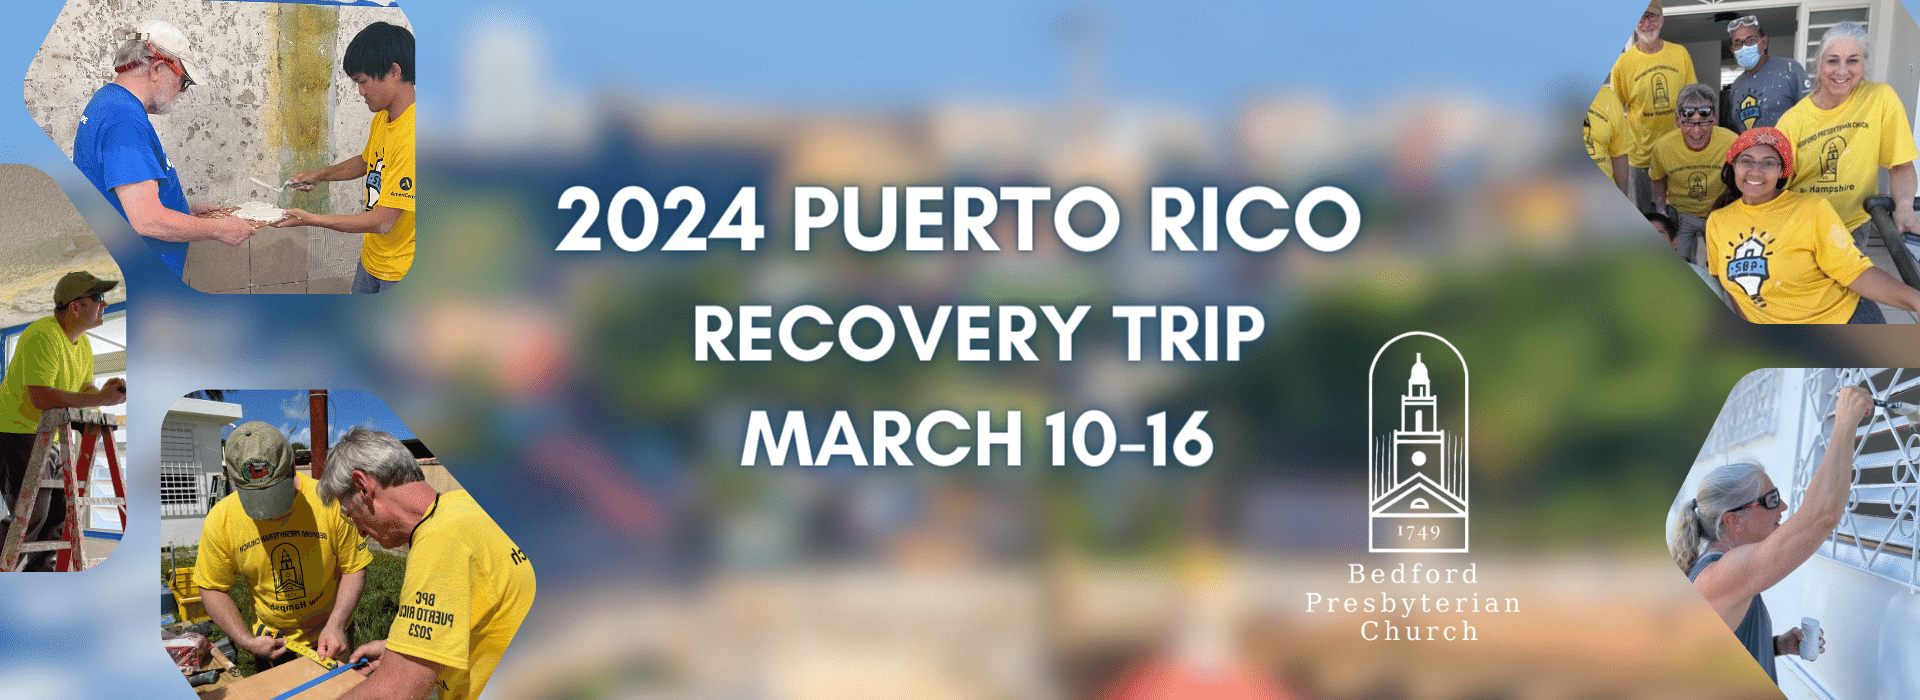 2024 Puerto Rico Recovery Trip